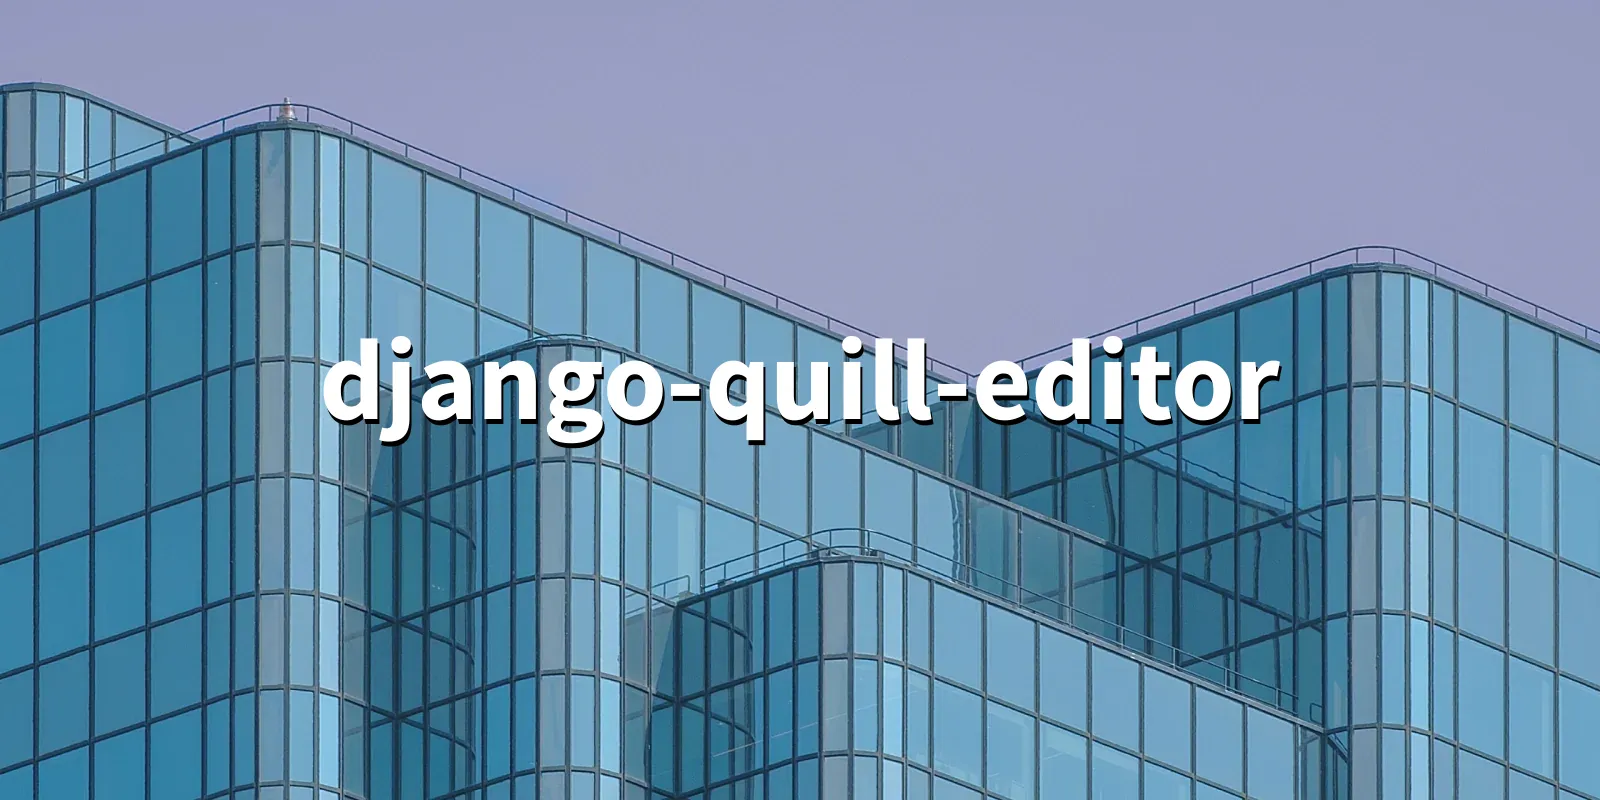 /pkg/d/django-quill-editor/django-quill-editor-banner.webp